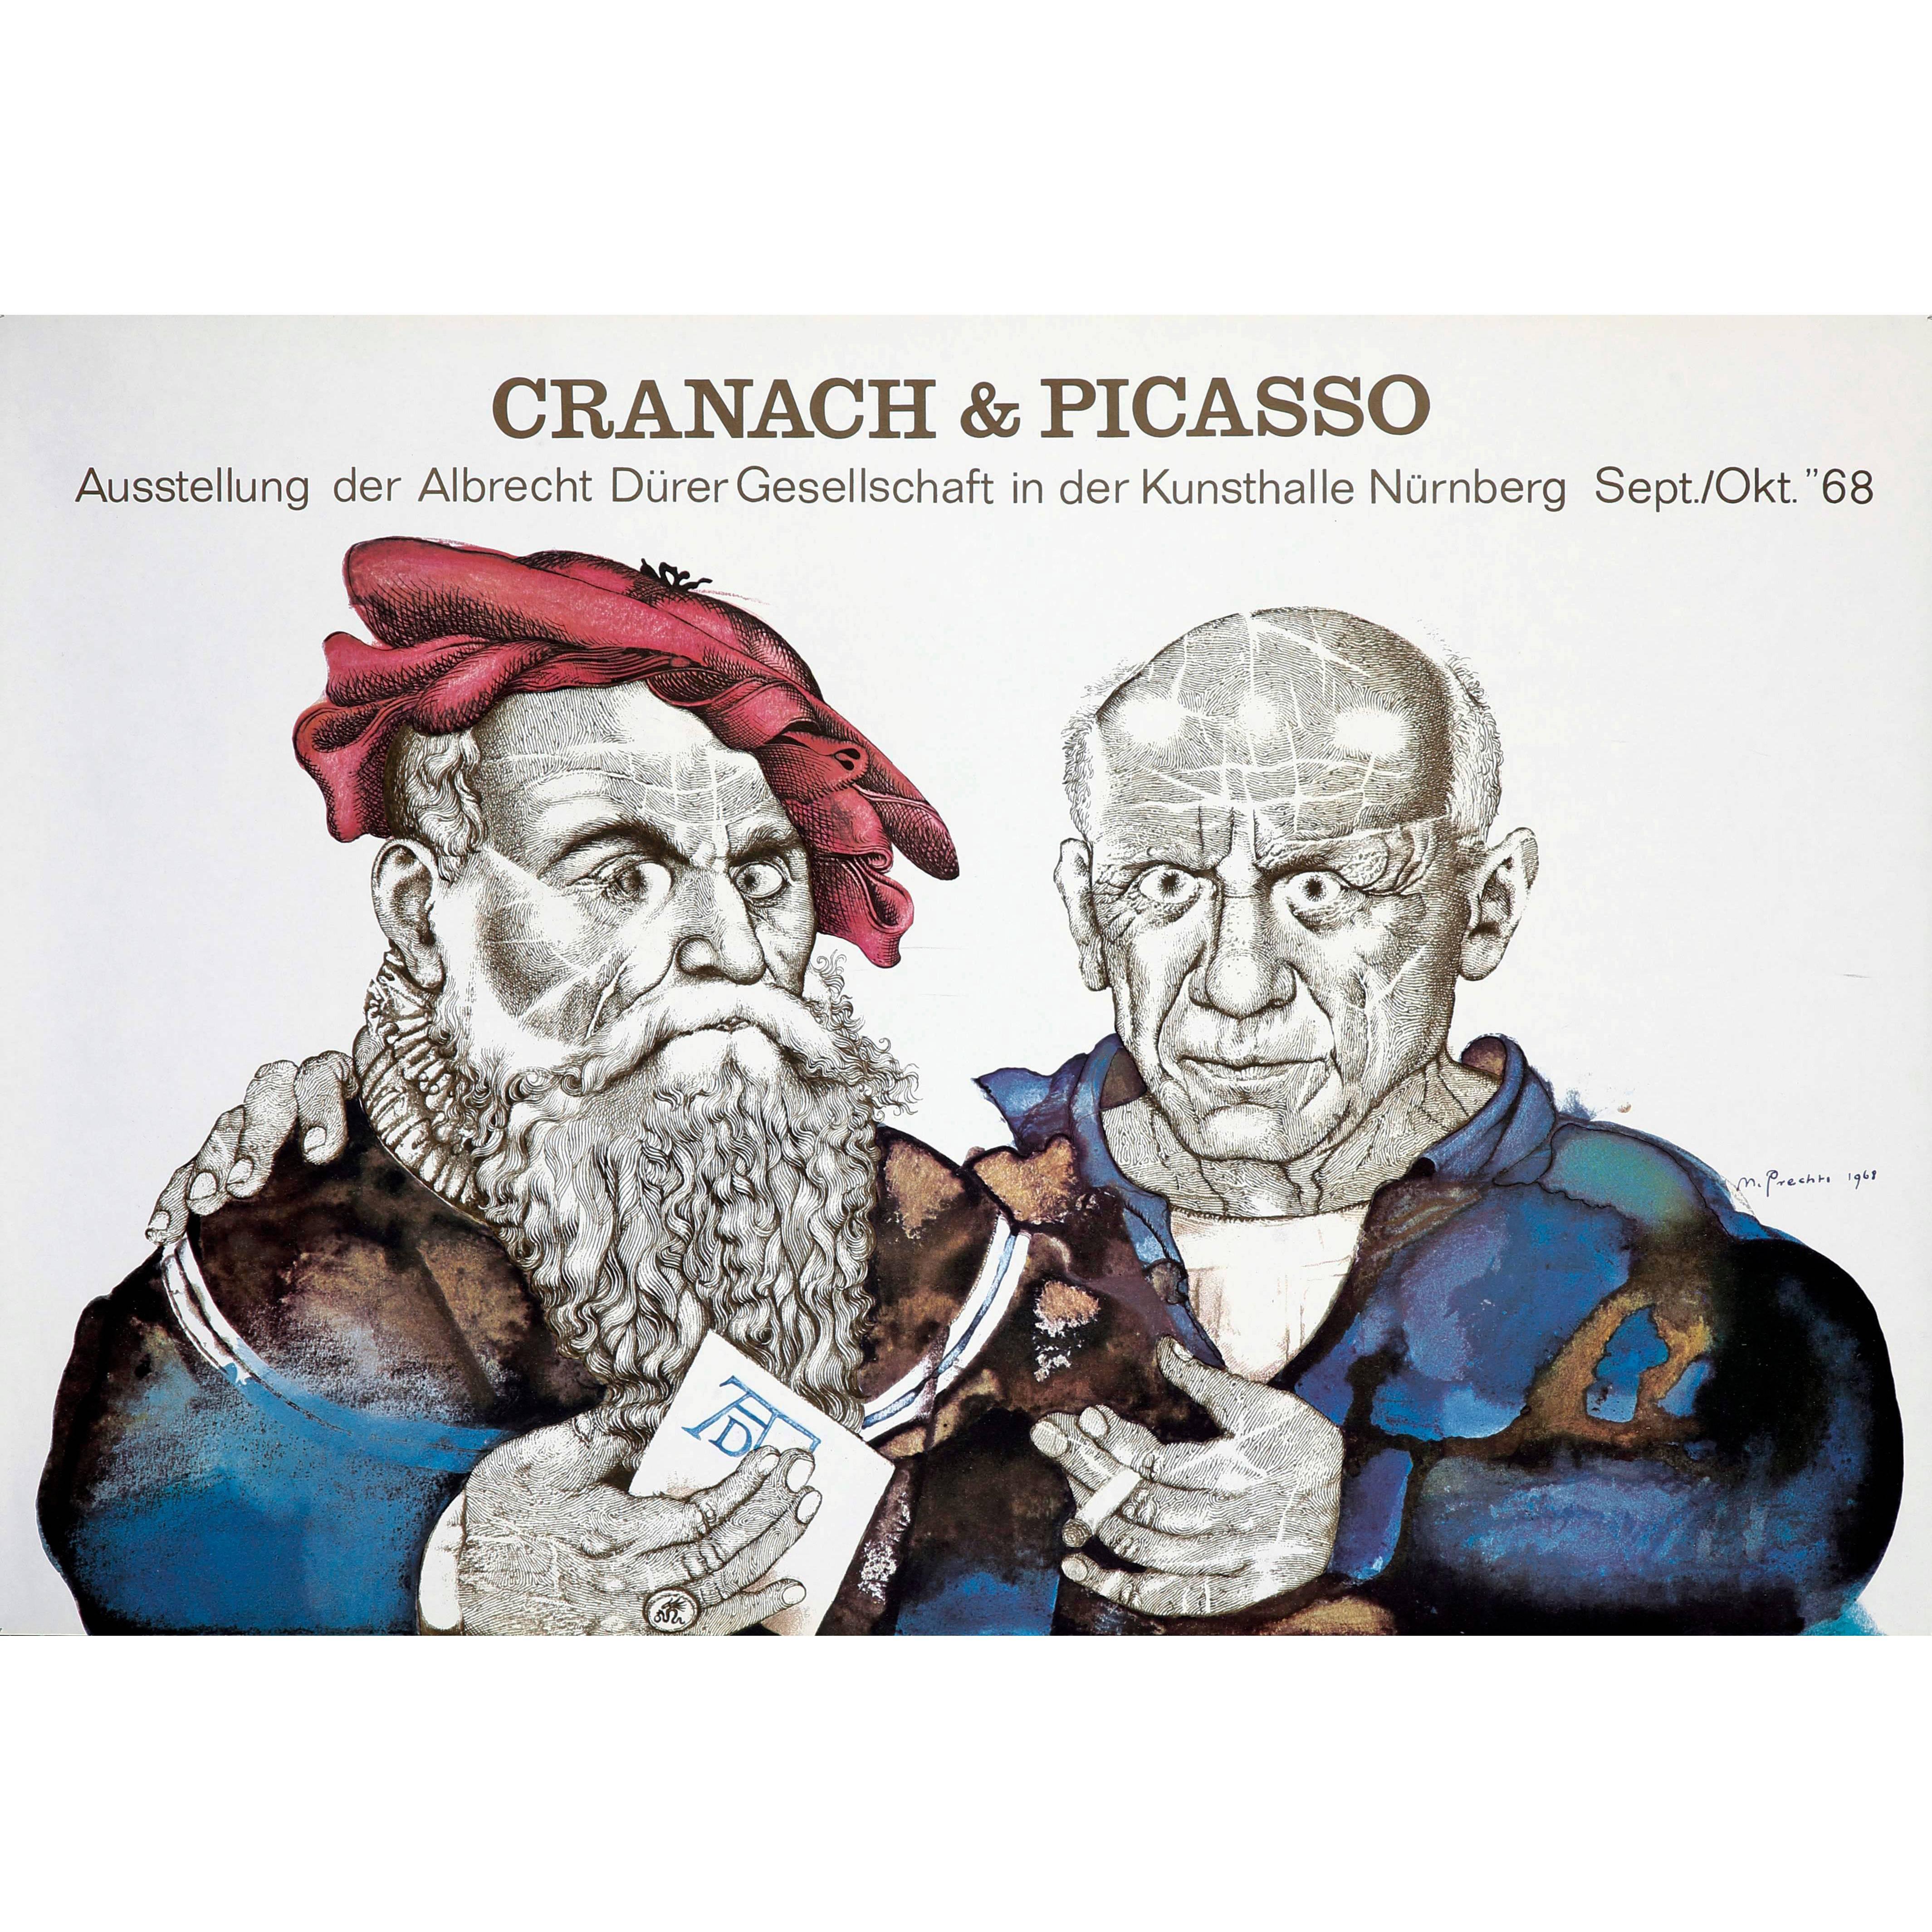 Cranach and Picasso by Michael Mathias Prechtl